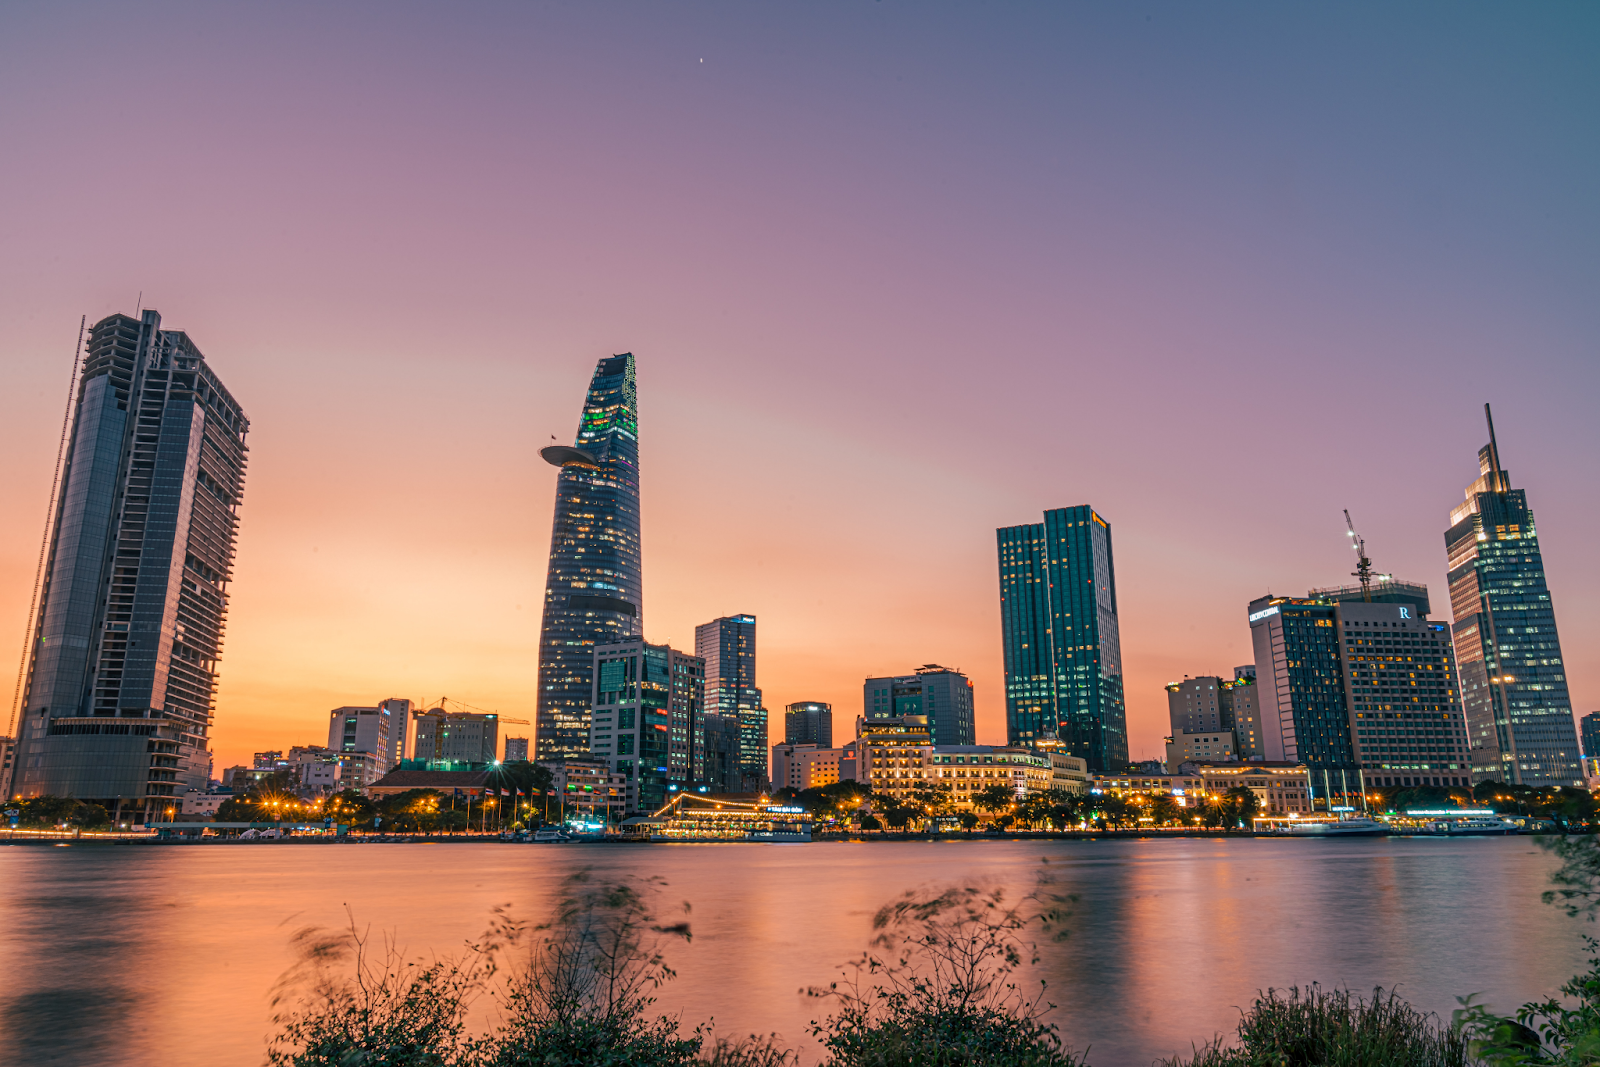 Ho Chi Minh City - A Bustling Metropolis